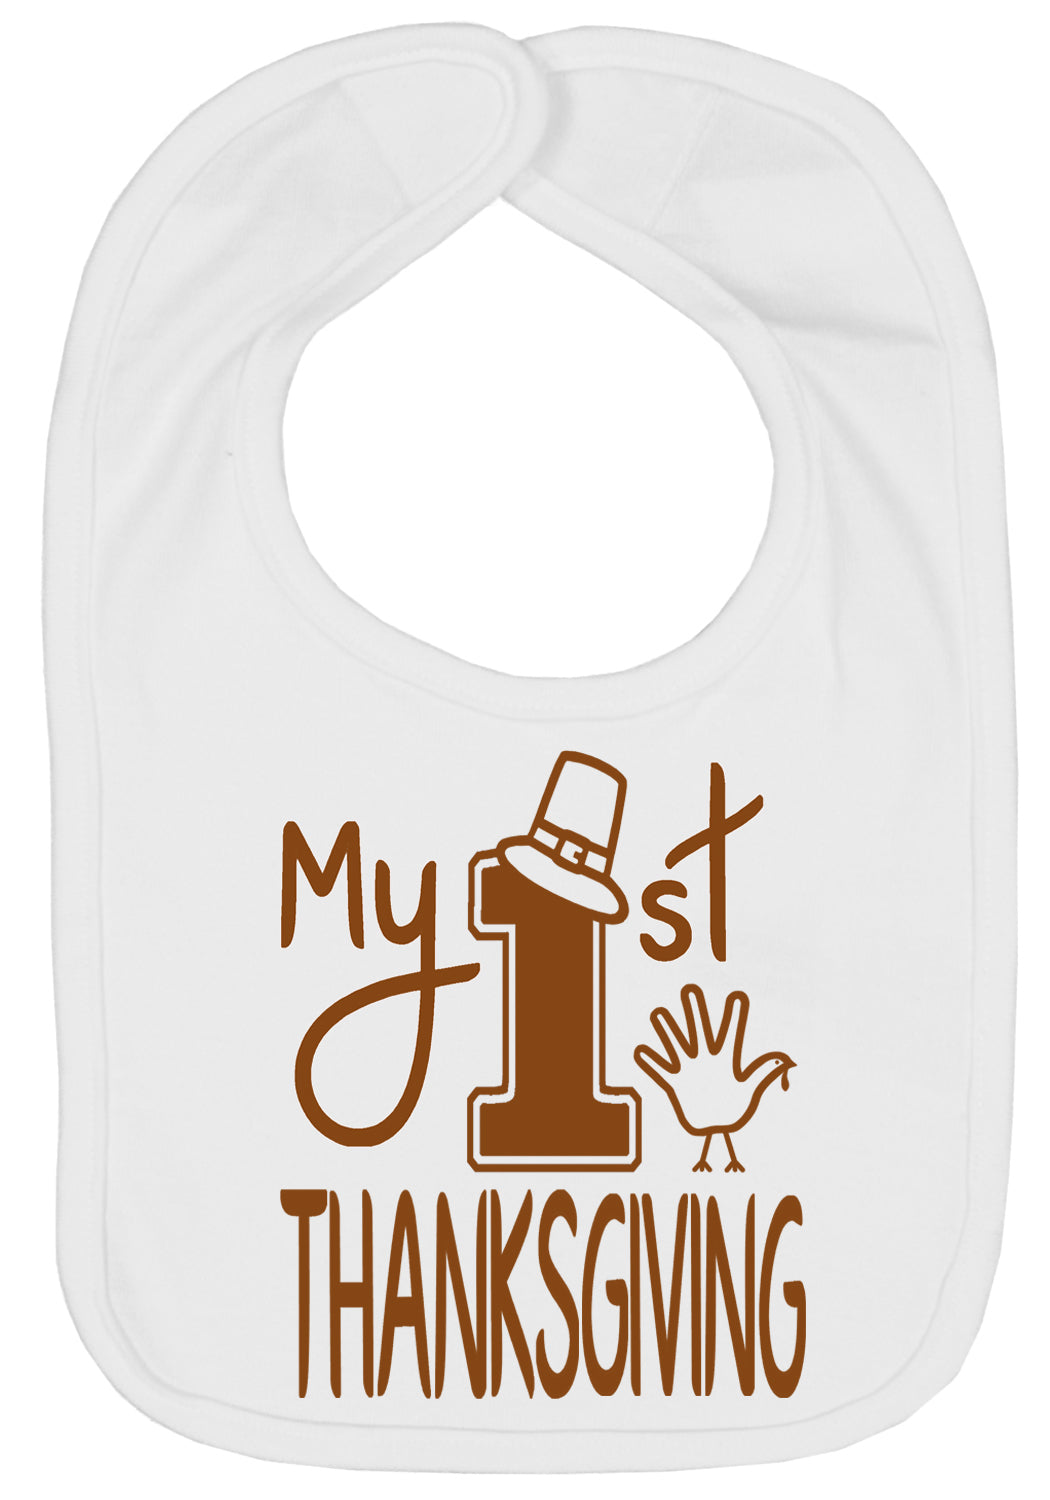 Baby Infant 1st Thanksgiving Bib